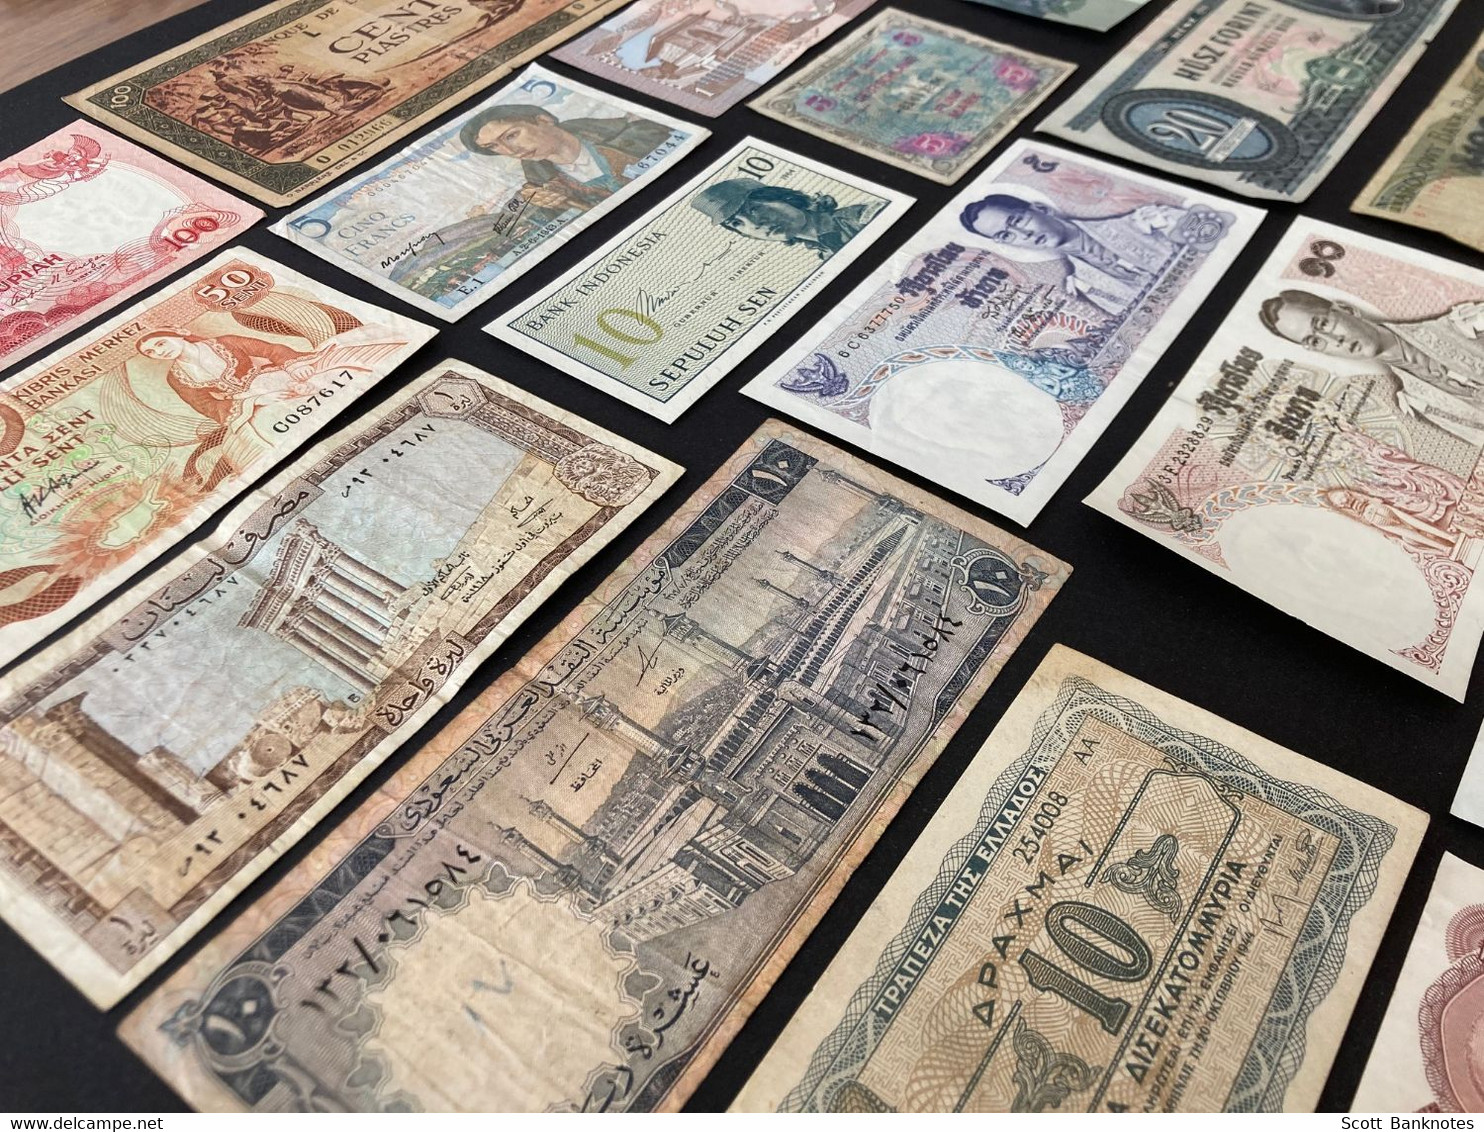 25 x World Banknotes including Saudi, France, Cyprus, Pakistan, Thai